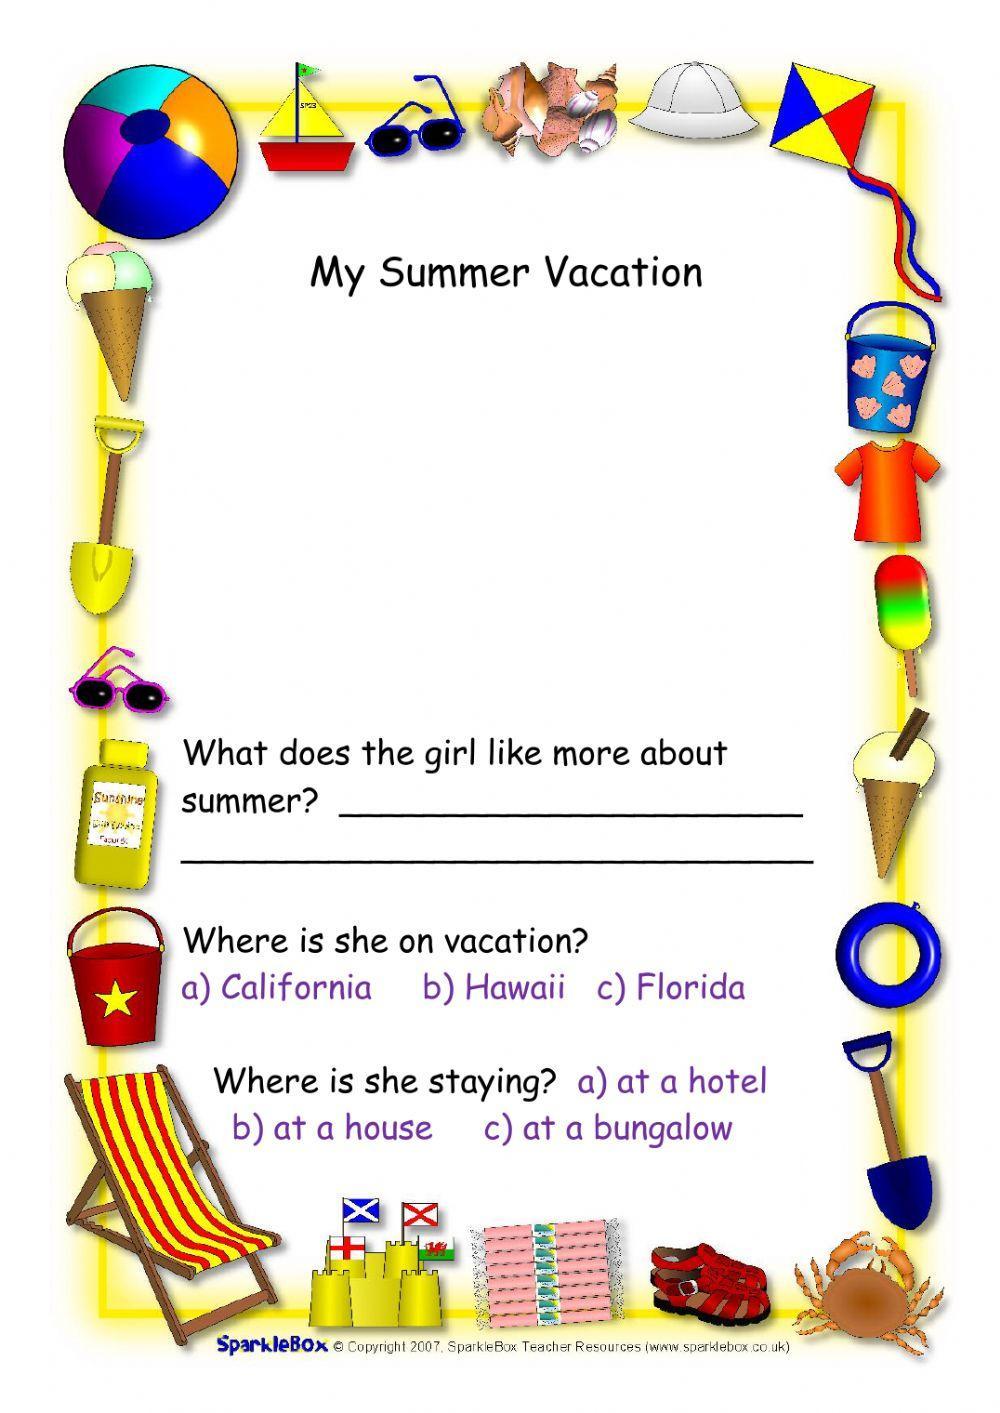 My Summer Vacation